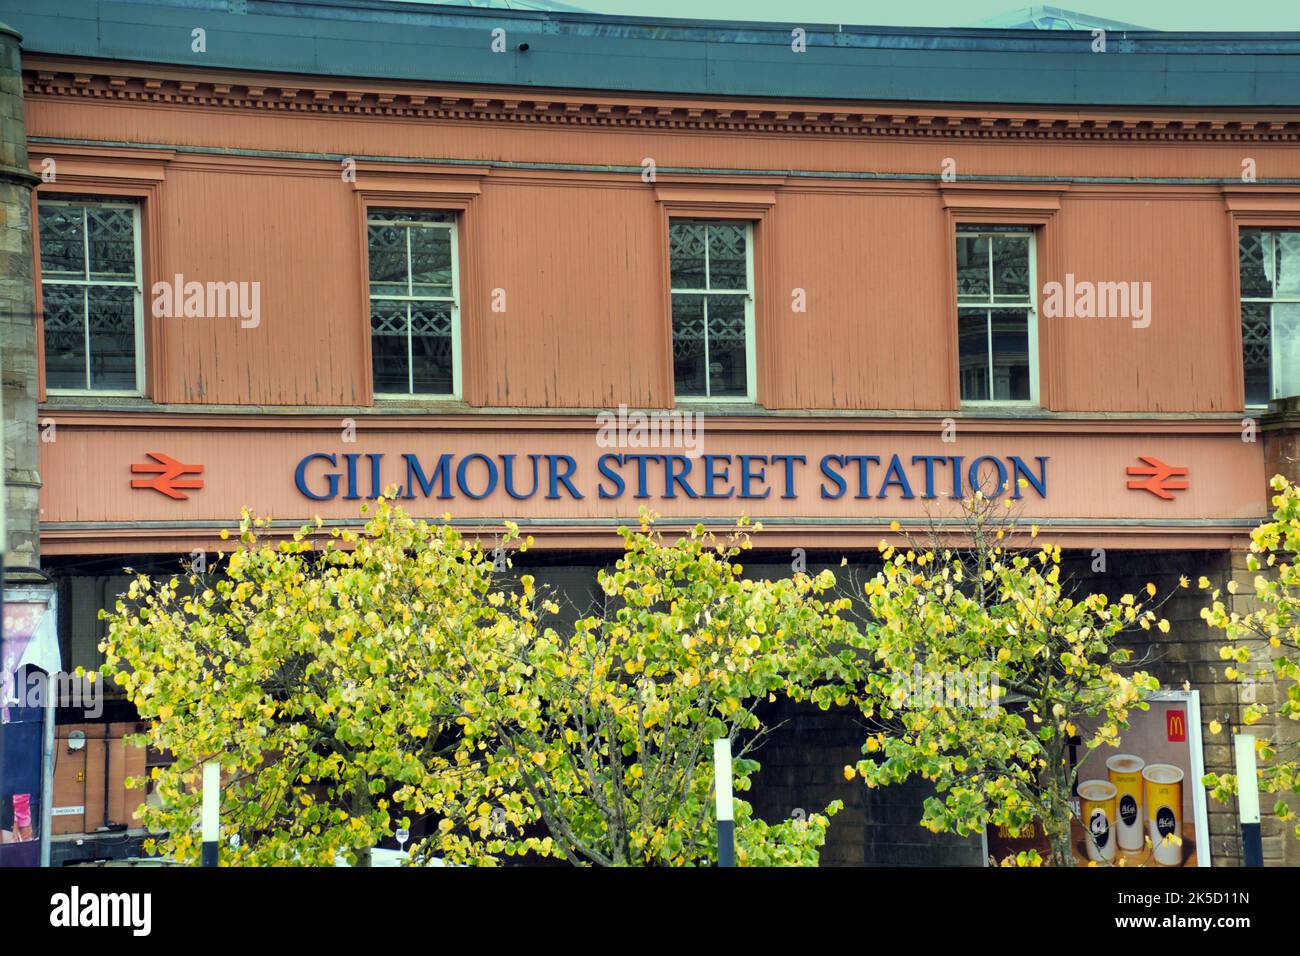 Gilmour Street railway station sign Paisley, Scotland, UK Stock Photo